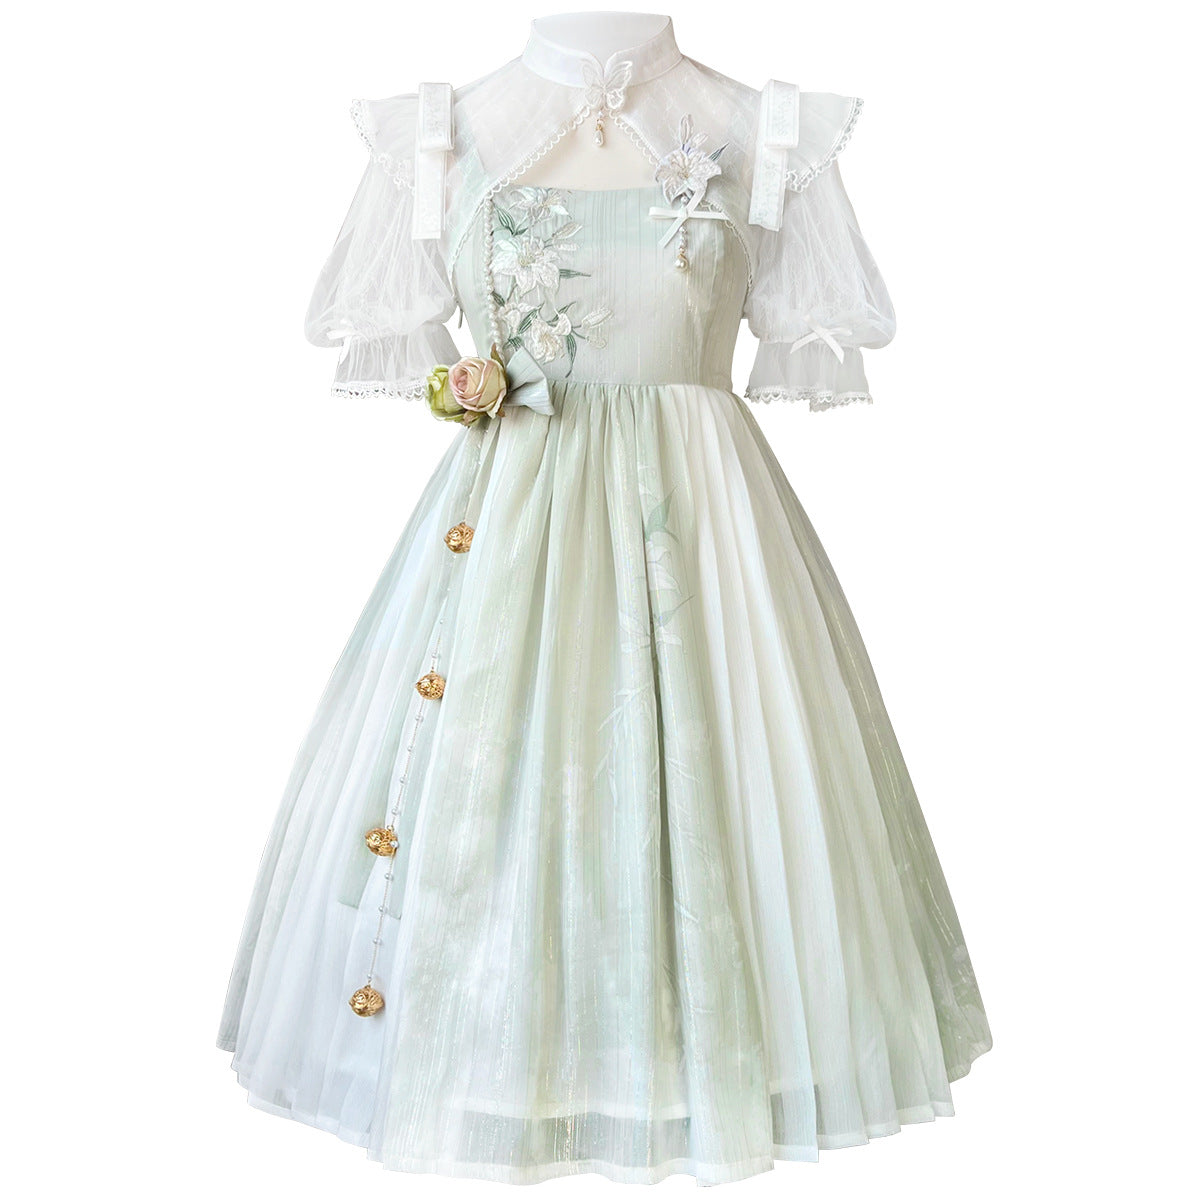 Cornfield Lolita~Wind Singing Lily~Qi Lolita Embroidered Dress Suit bolero and dress S 